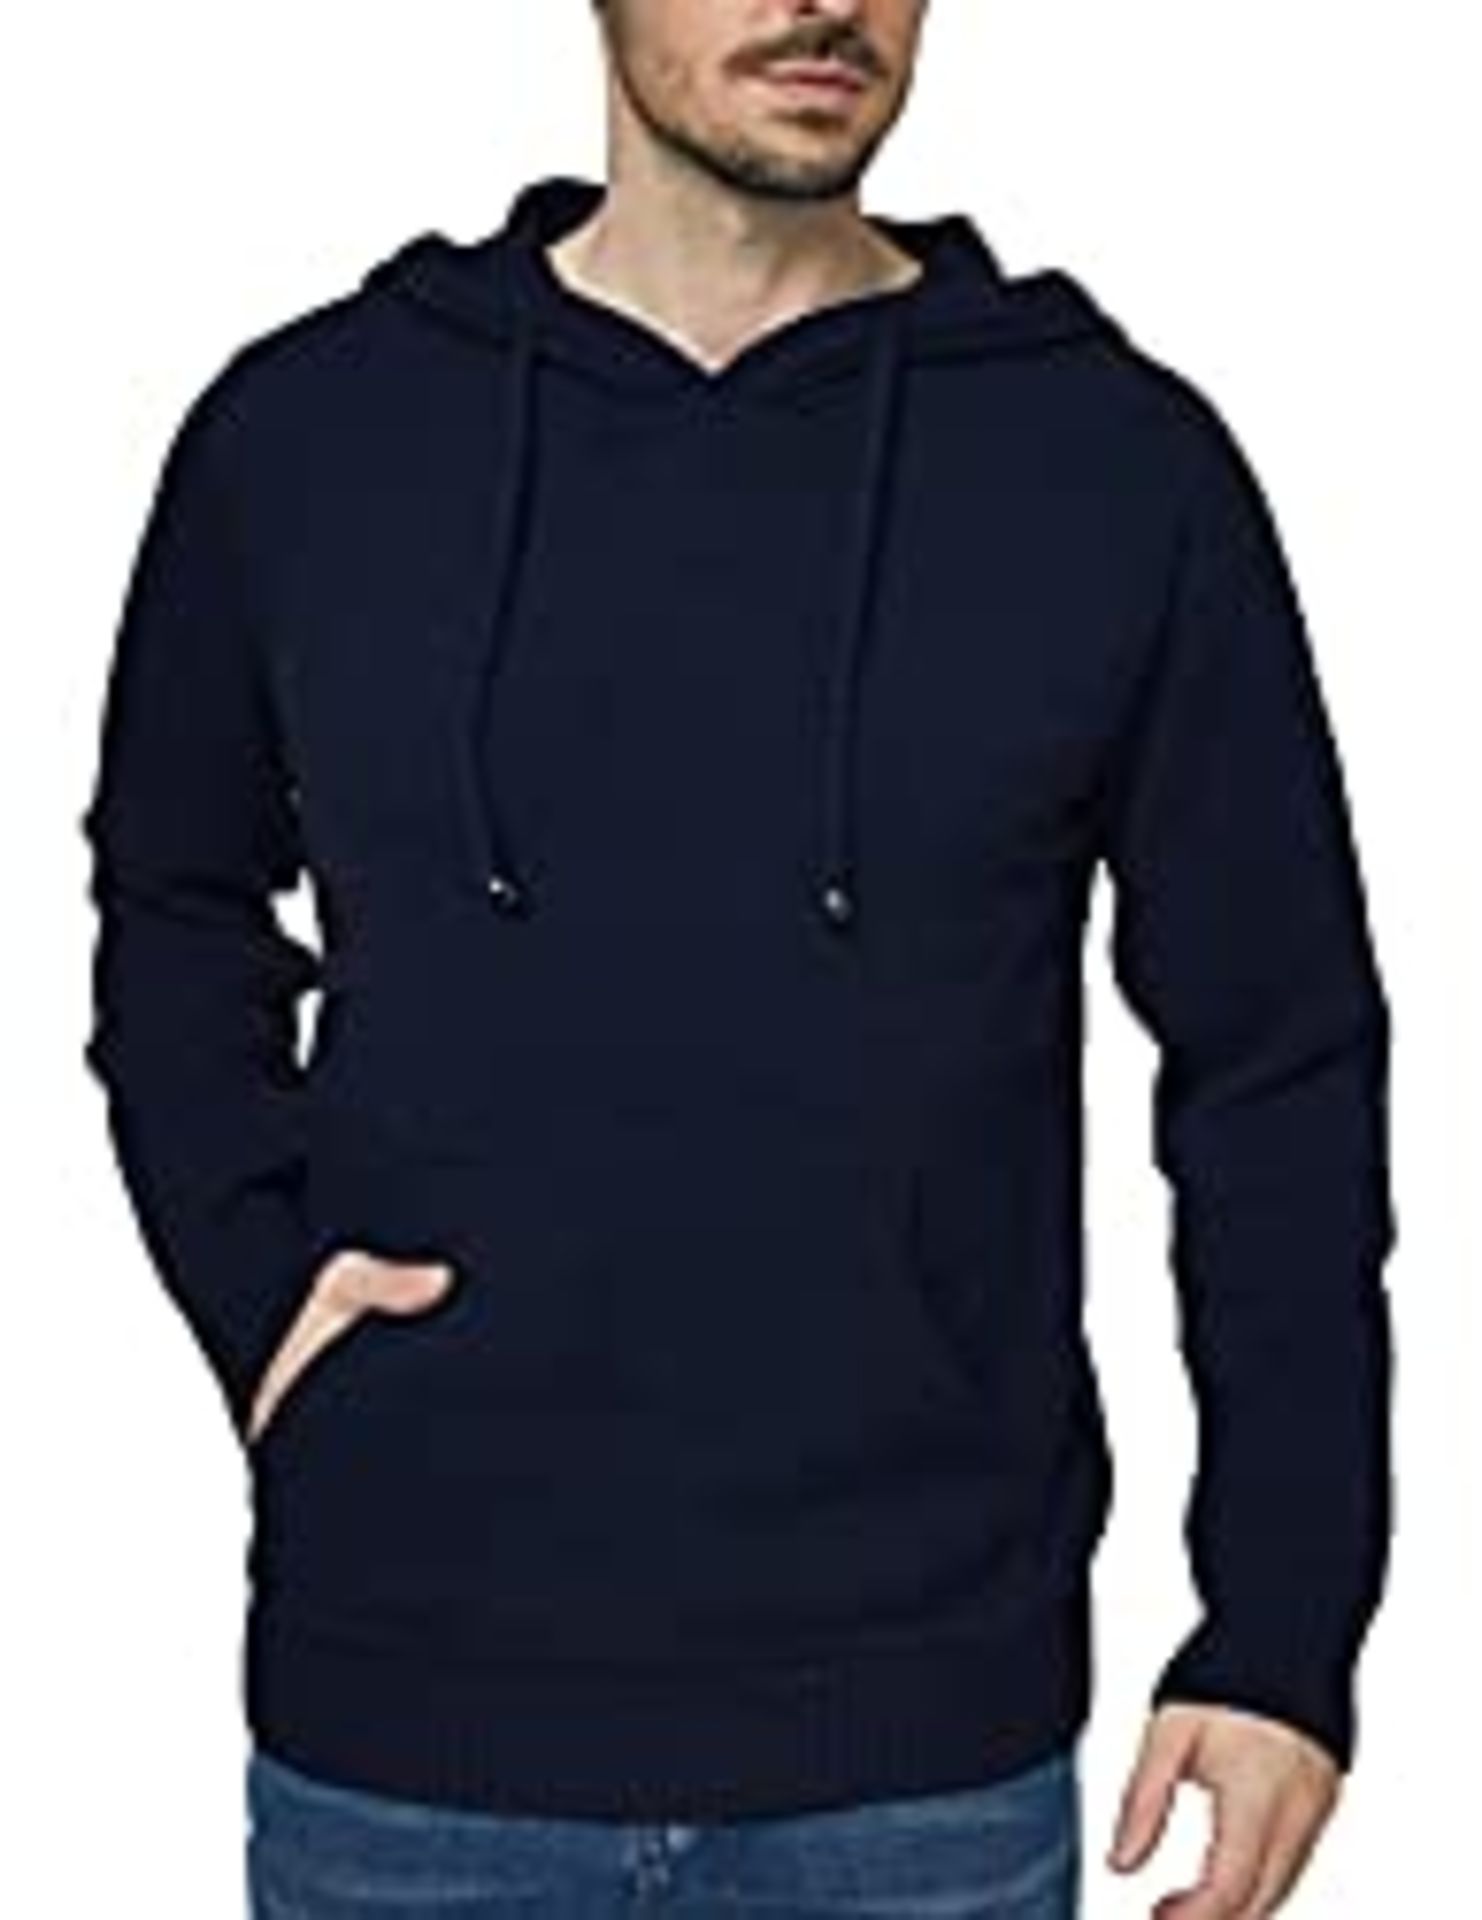 RRP £18.00 Wantdo Men s Casual Warm Full Zip Cardigan Sweater